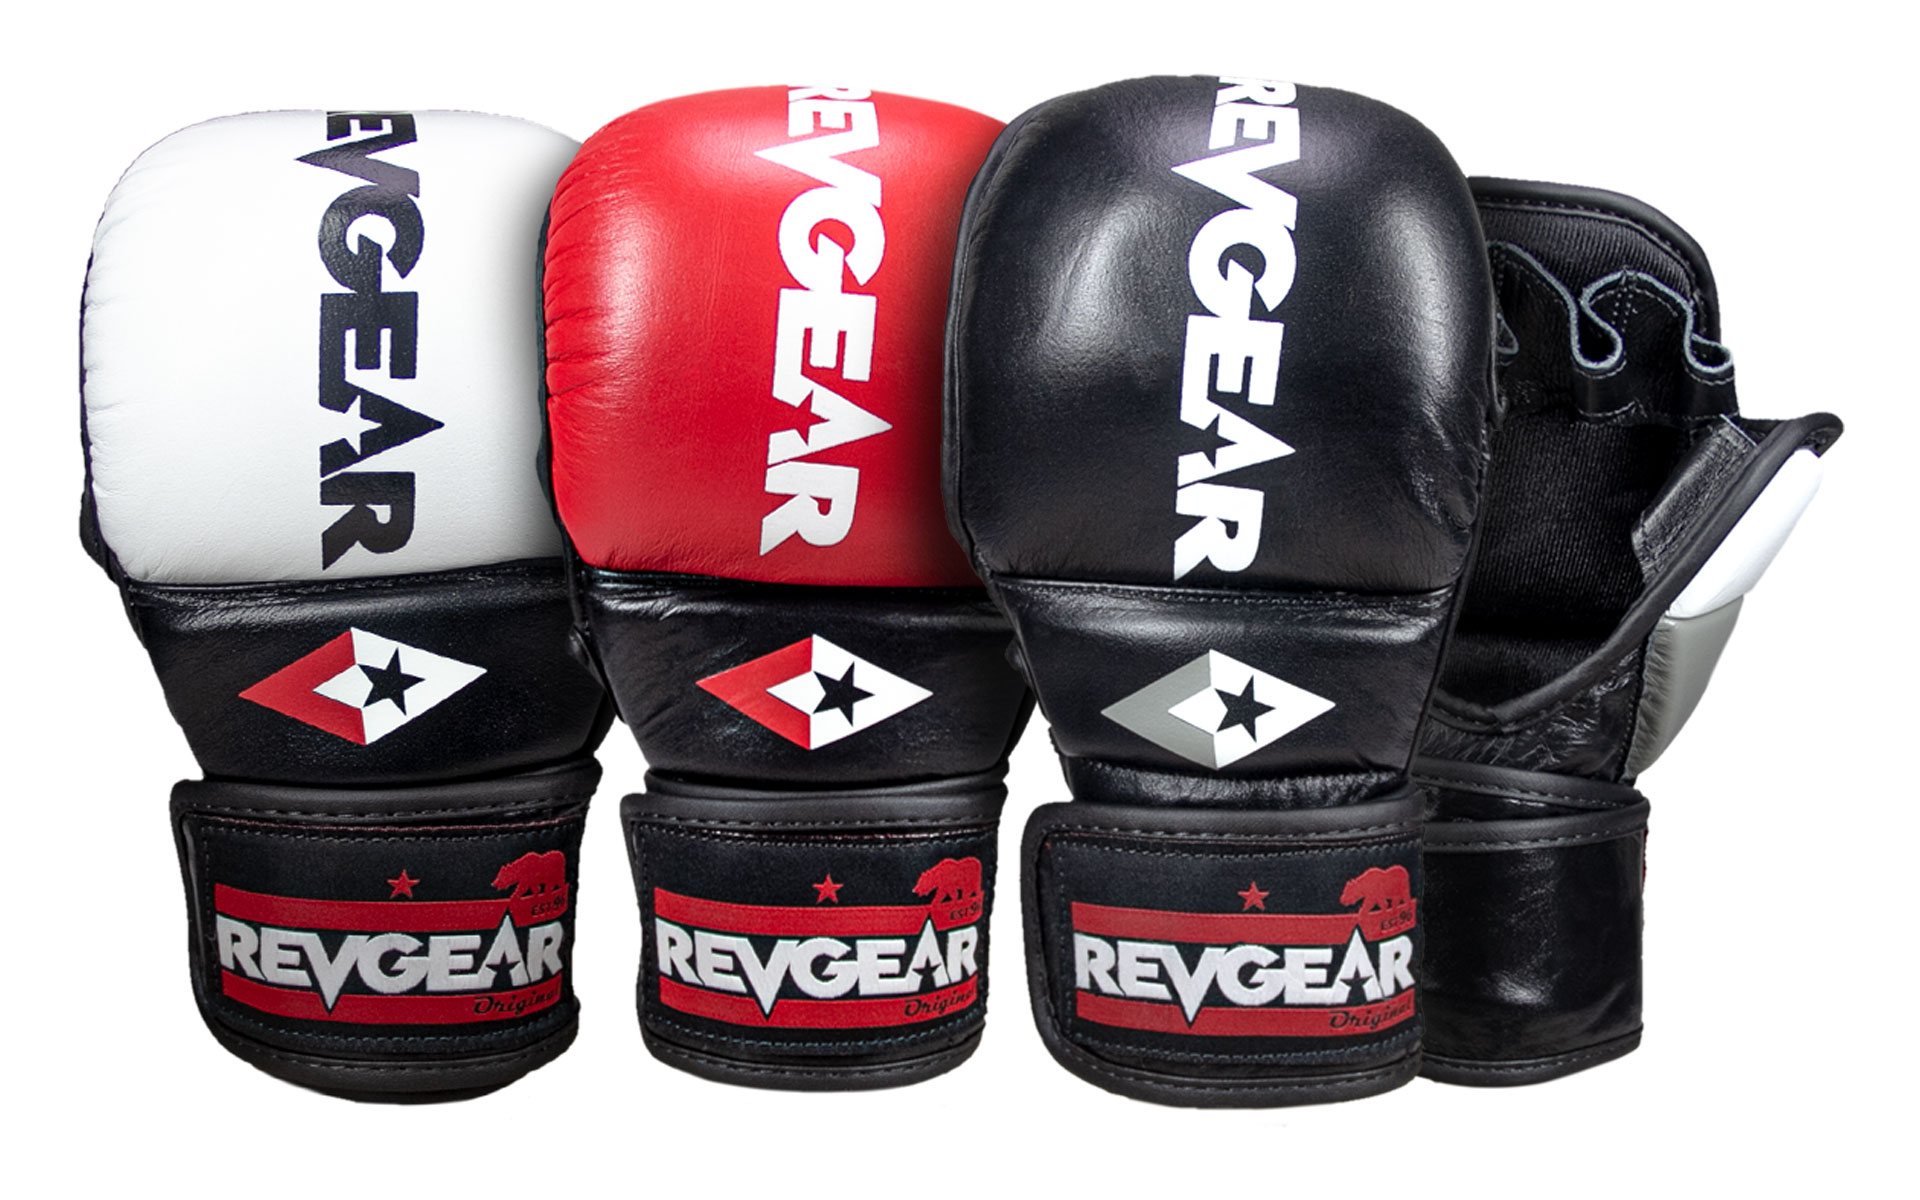 MMA Gloves vs boxing gloves